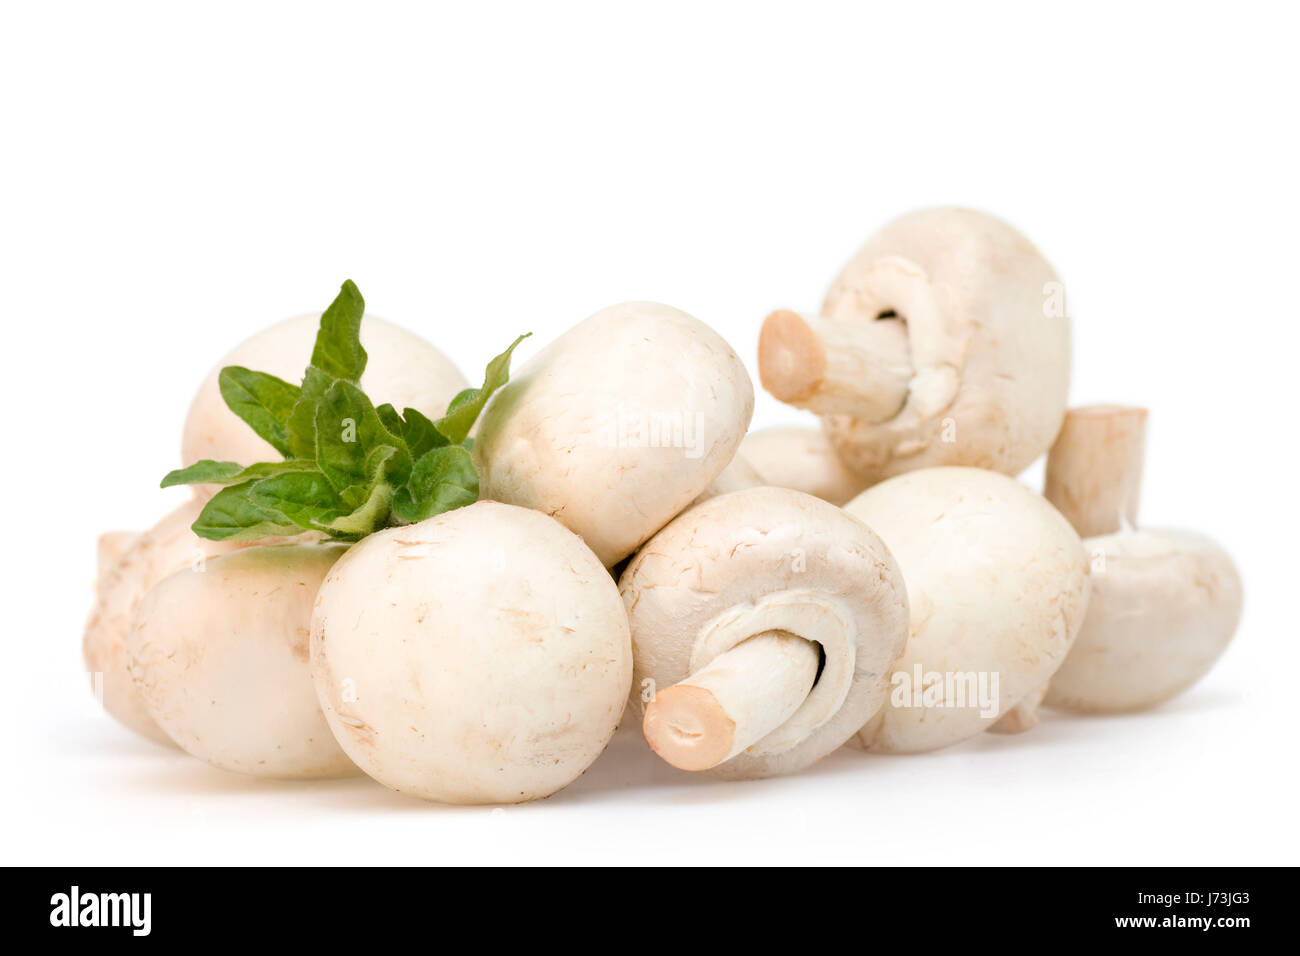 Dieta champignon speisepilz orégano isoliert speisen rohtextfreiraum Pilz Foto de stock